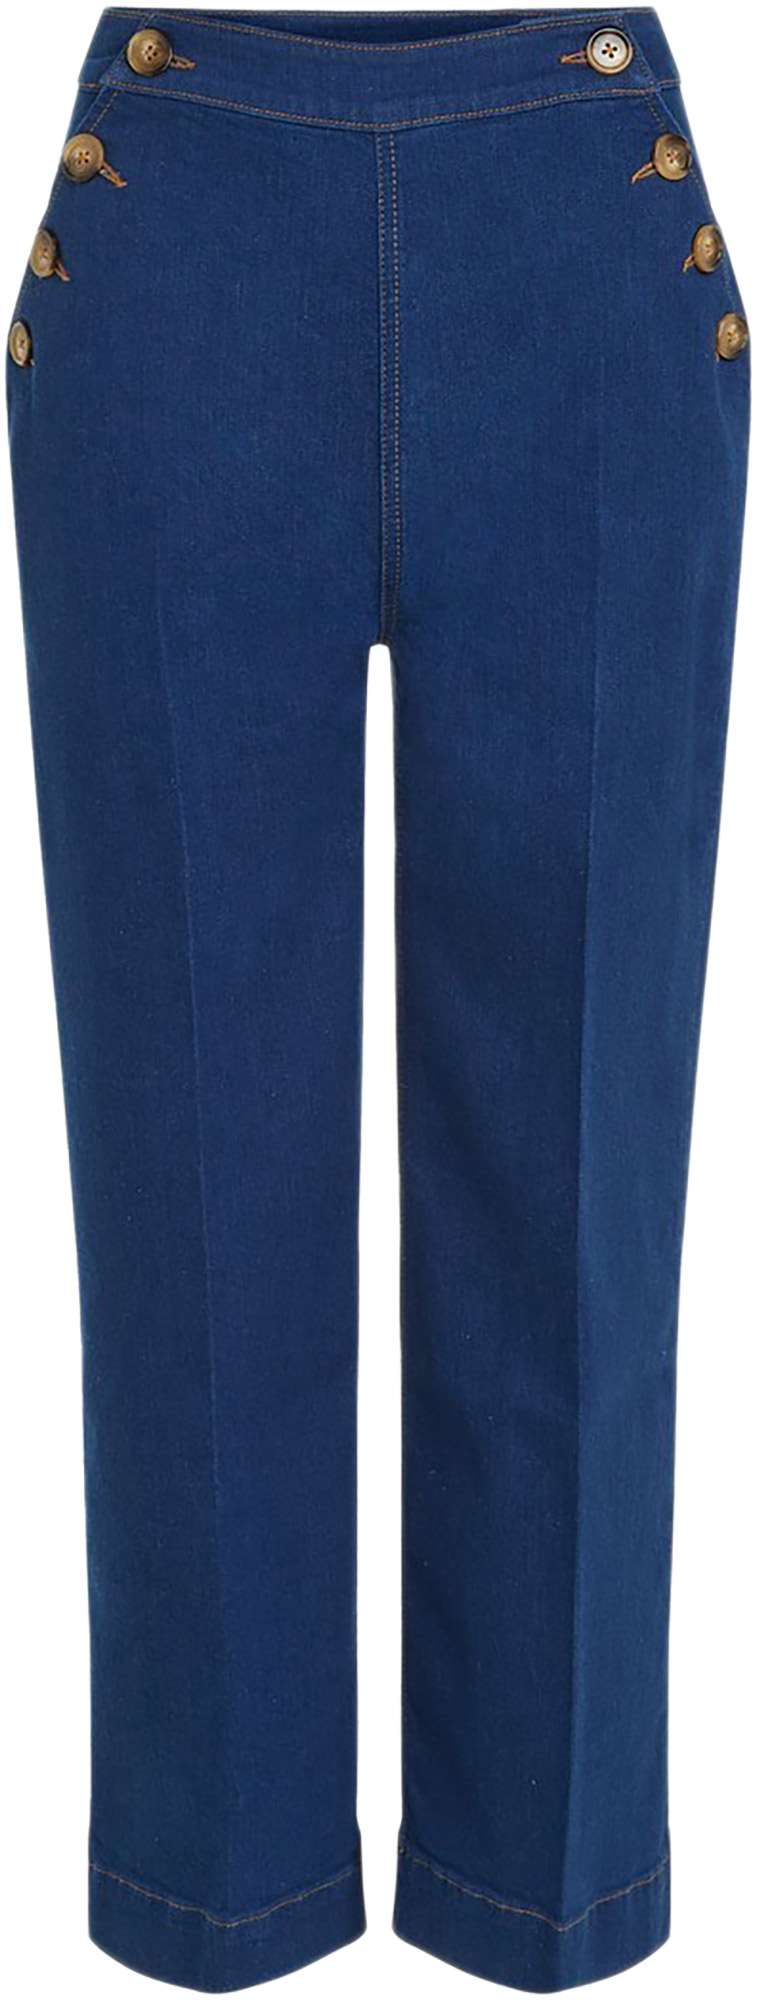 Afbeelding van King Louie Marcie sailor pants sloane denim indigo blue